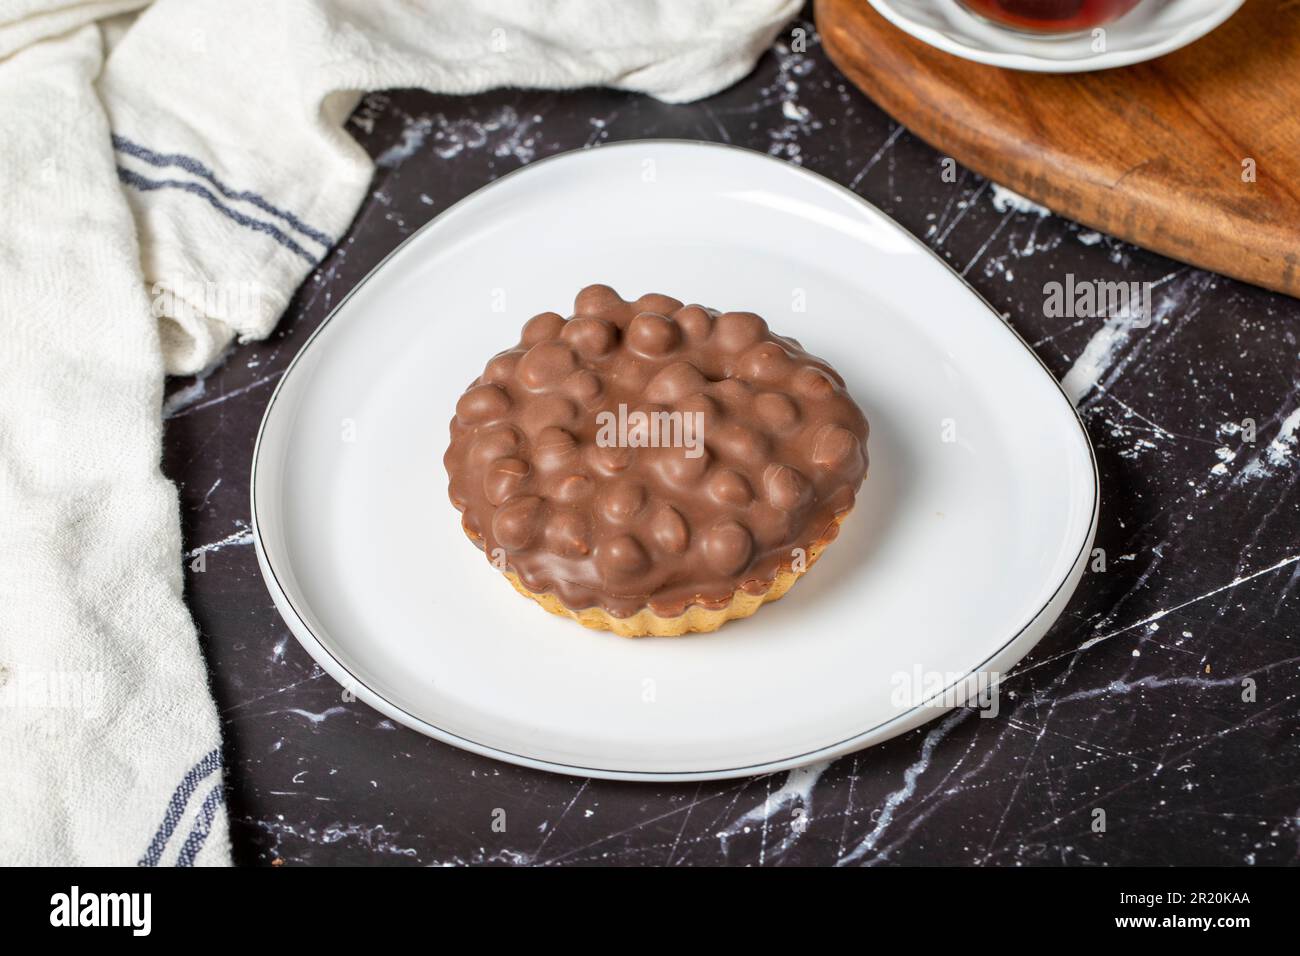 Chocolate pie. Hazelnut, cream and chocolate pie on dark background Stock Photo